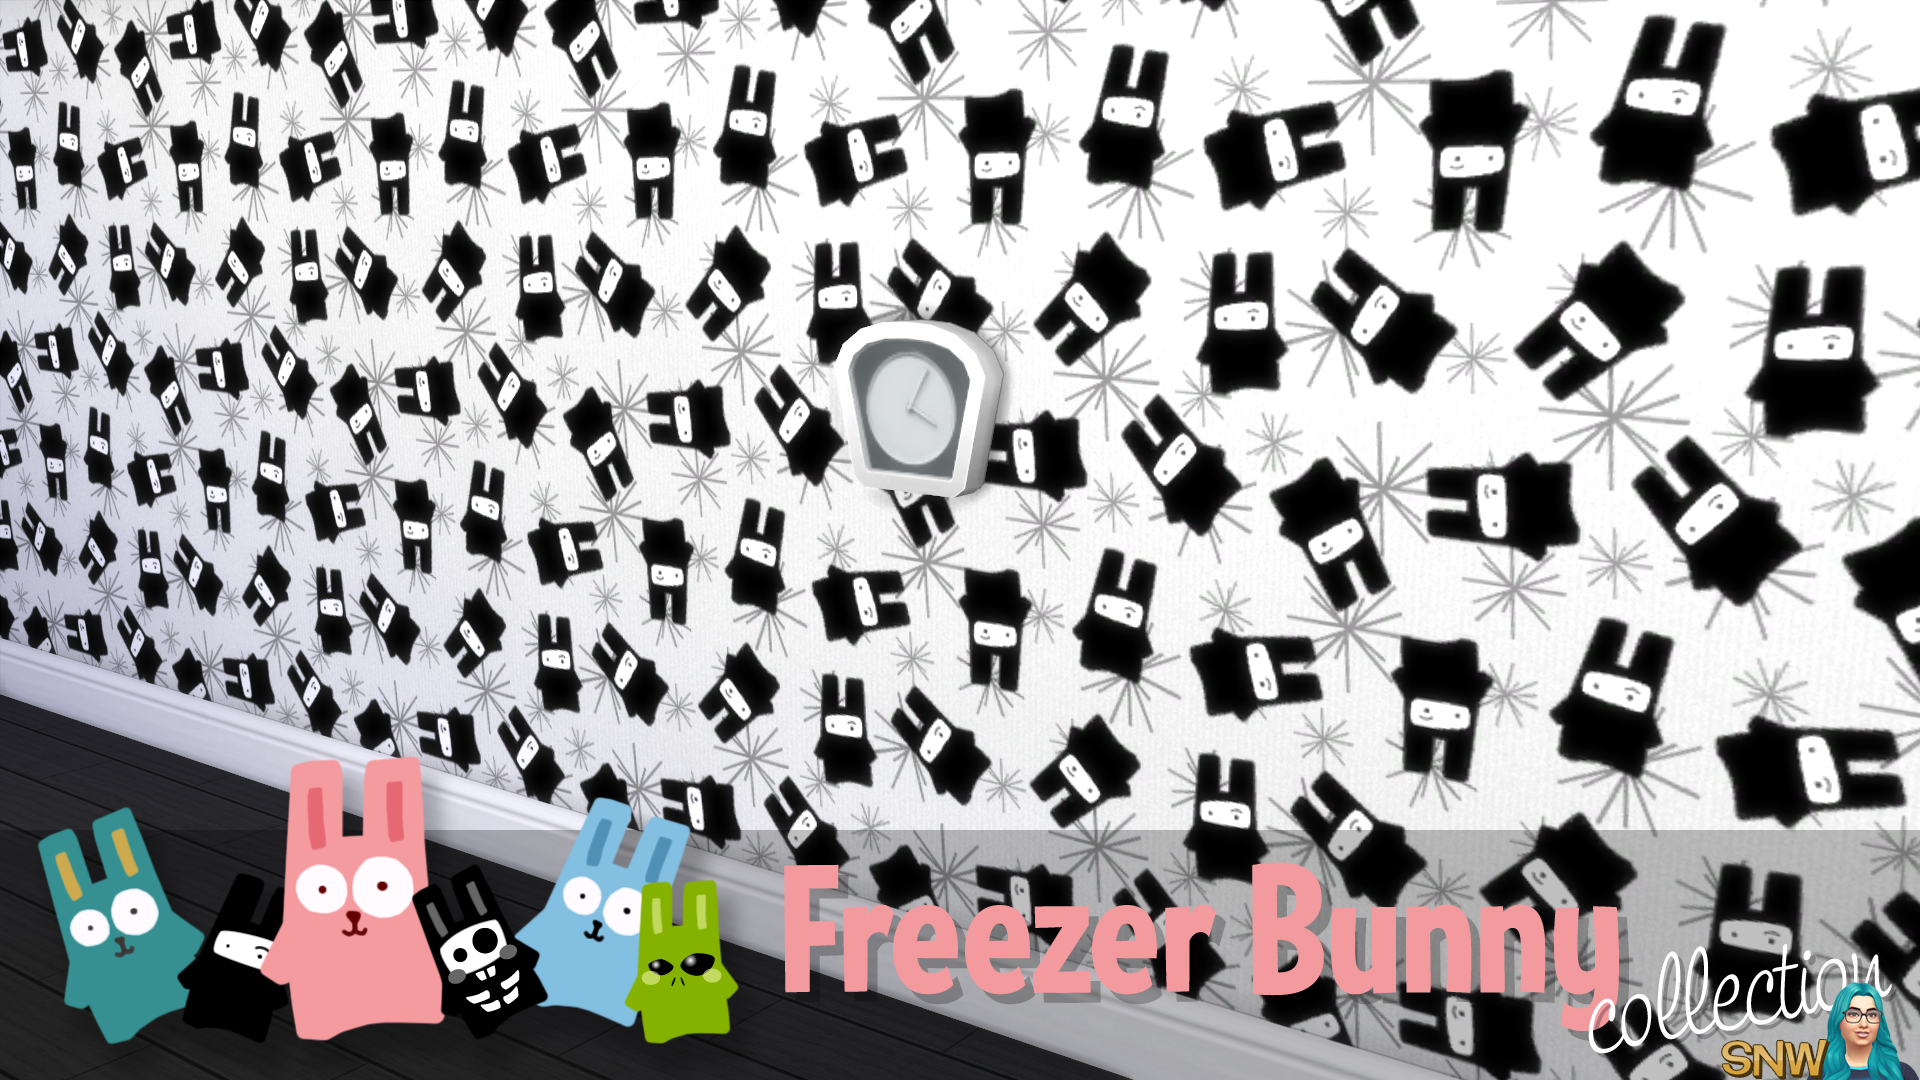 Freezer Bunny Collection: Clock